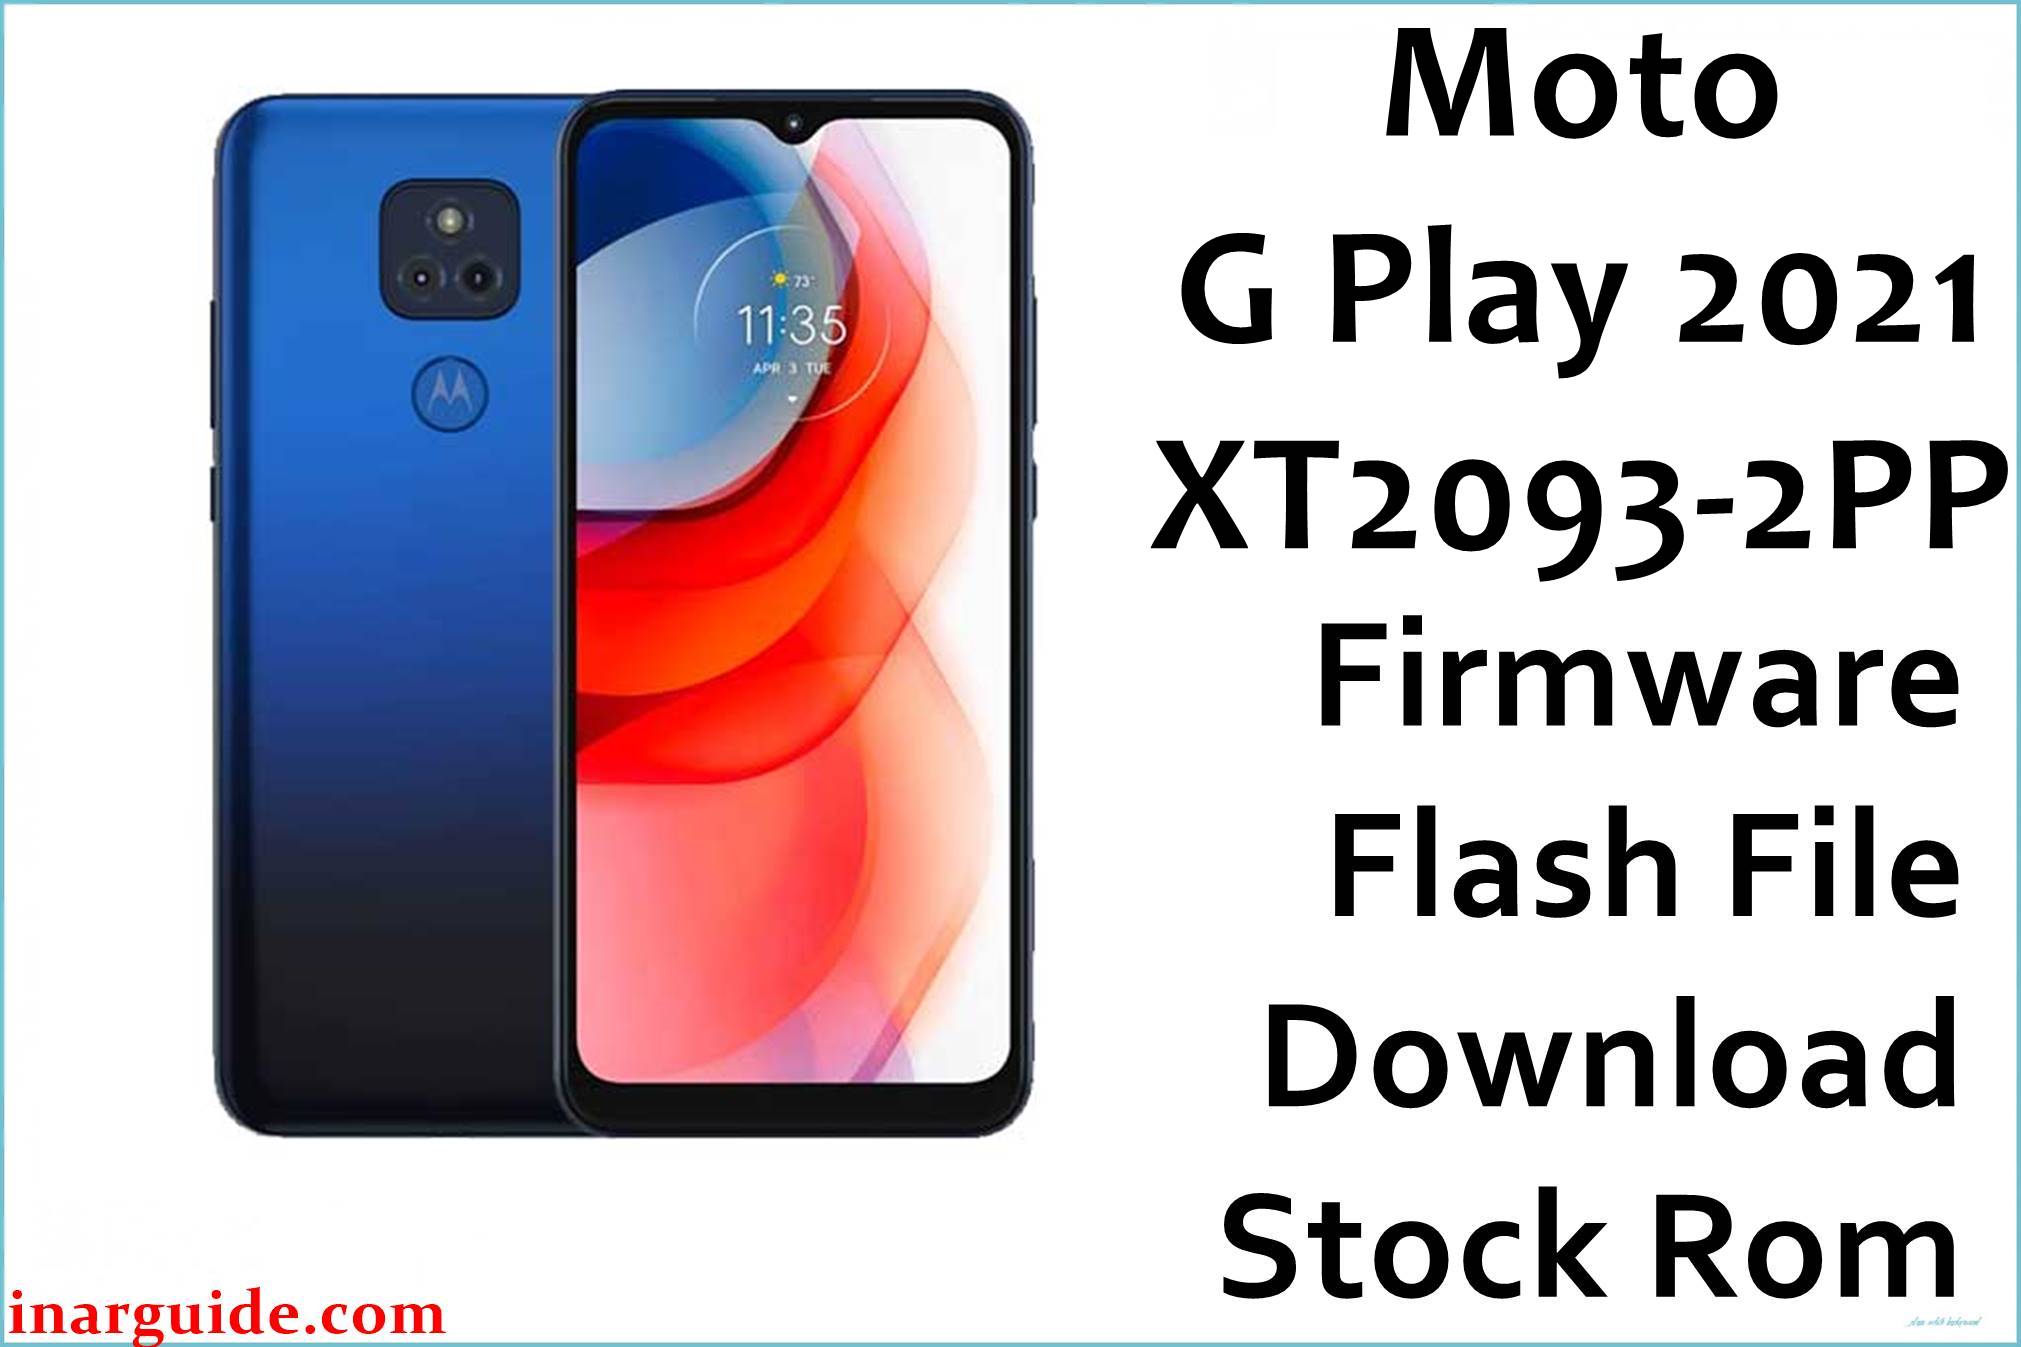 Motorola Moto G Play 2021 XT2093-2PP